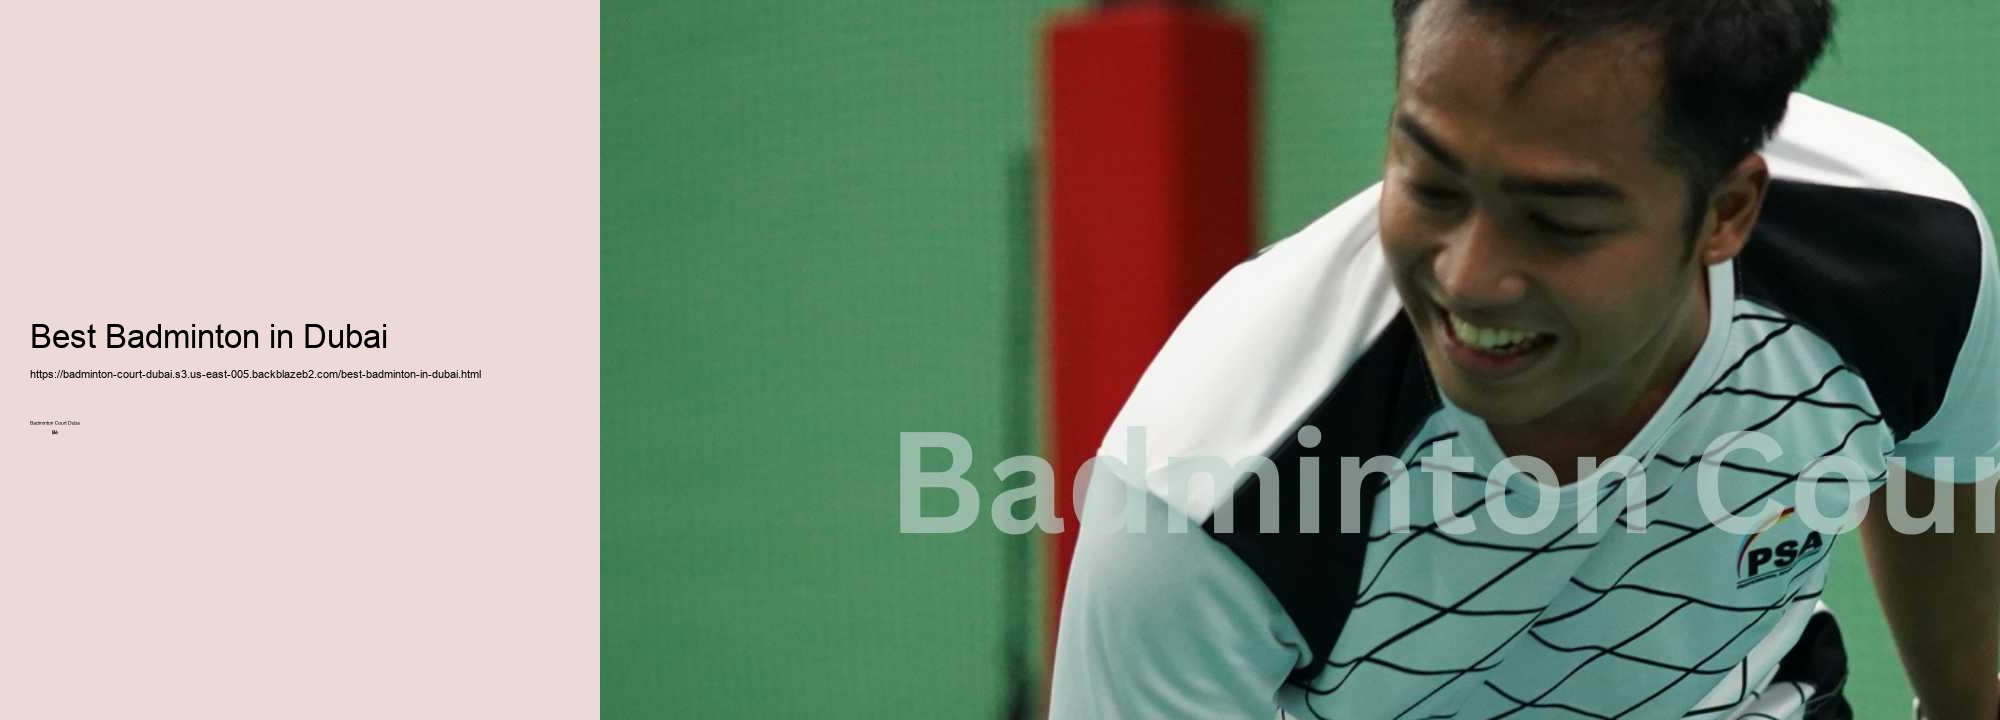 Best Badminton in Dubai